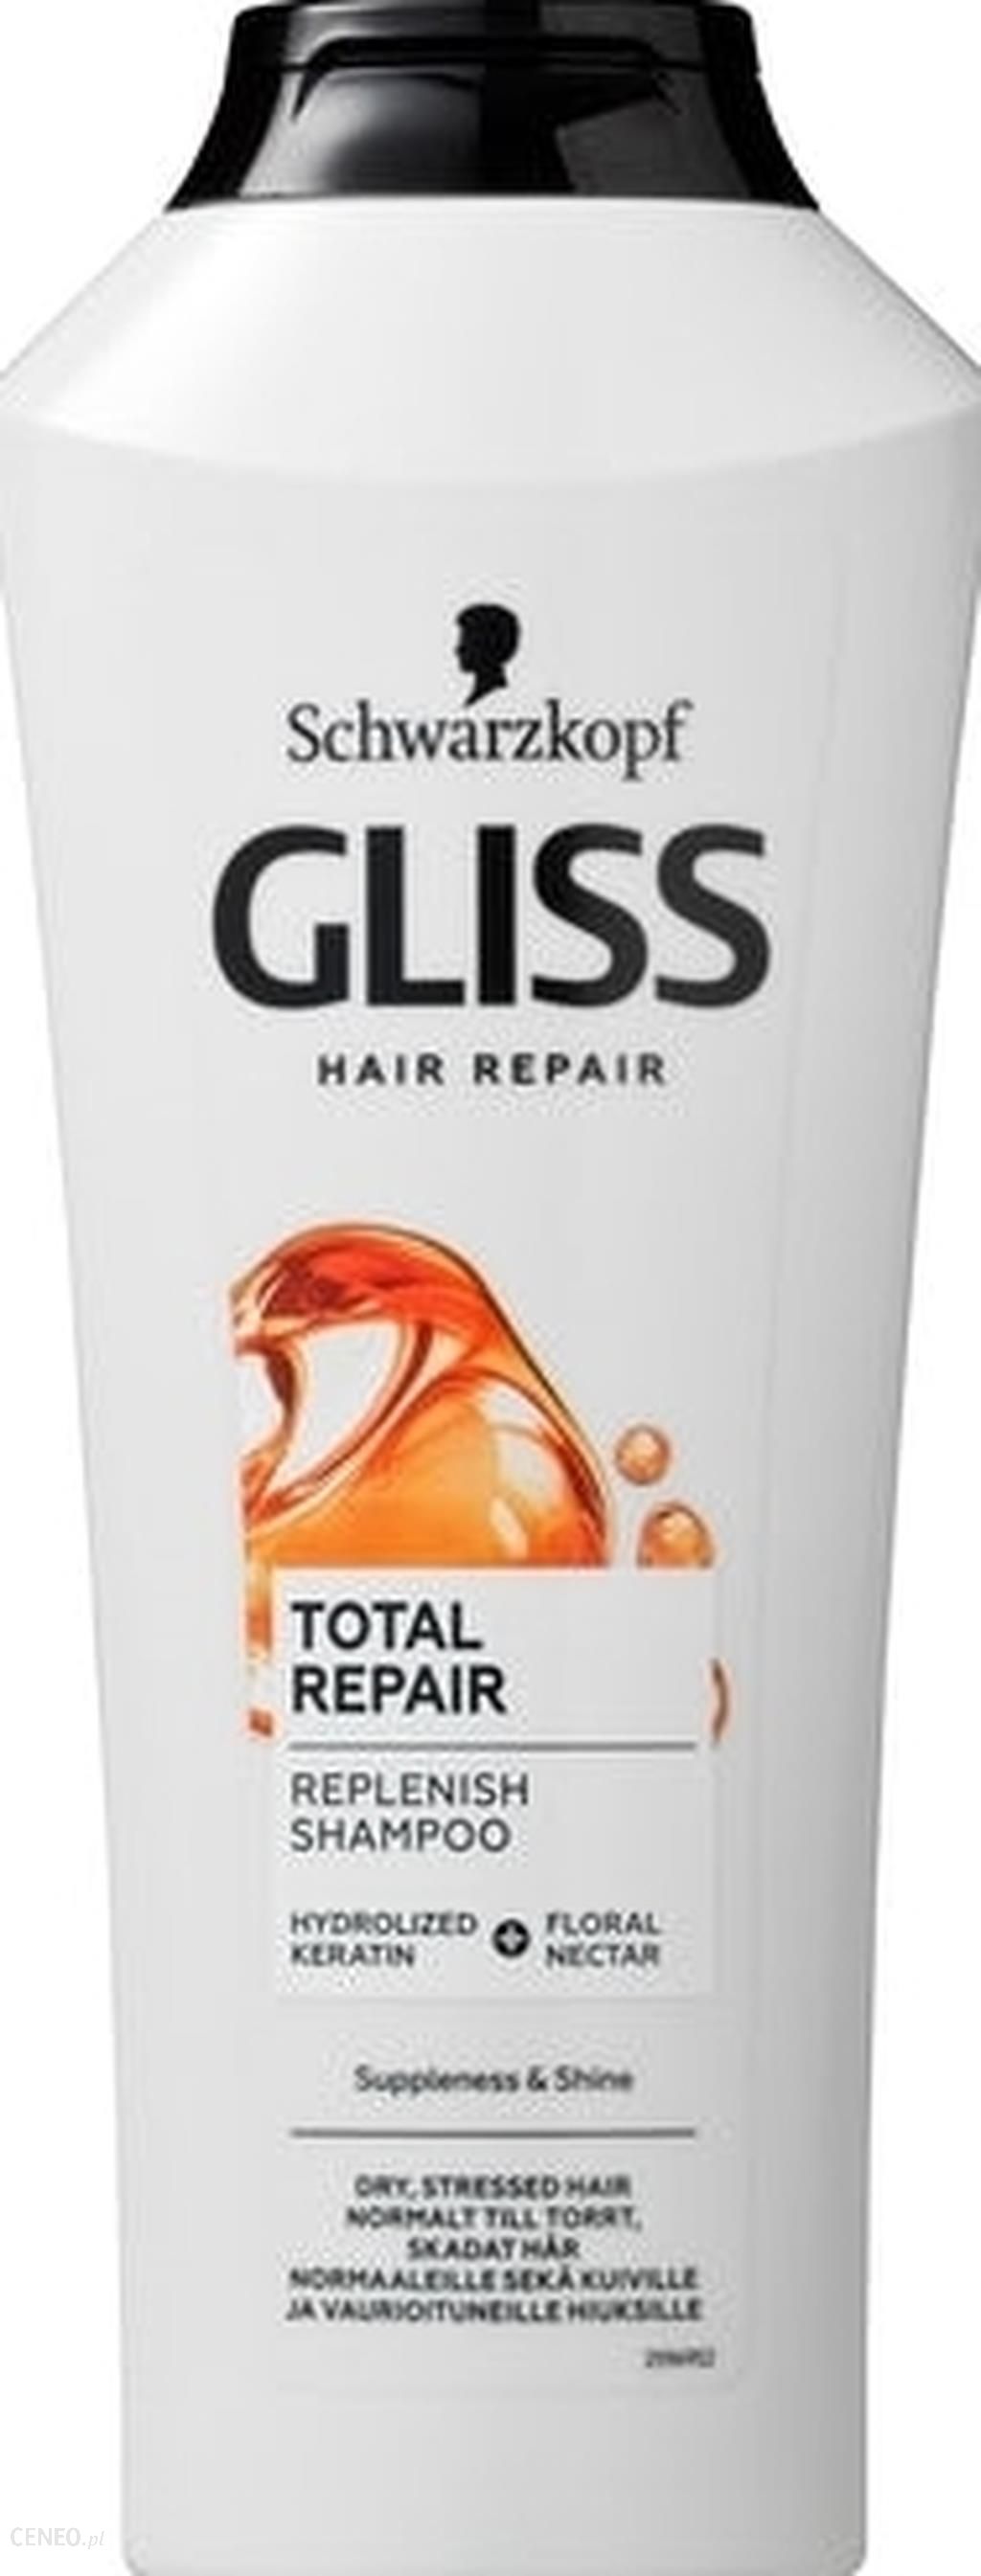 szampon gliss kur total repair opinie